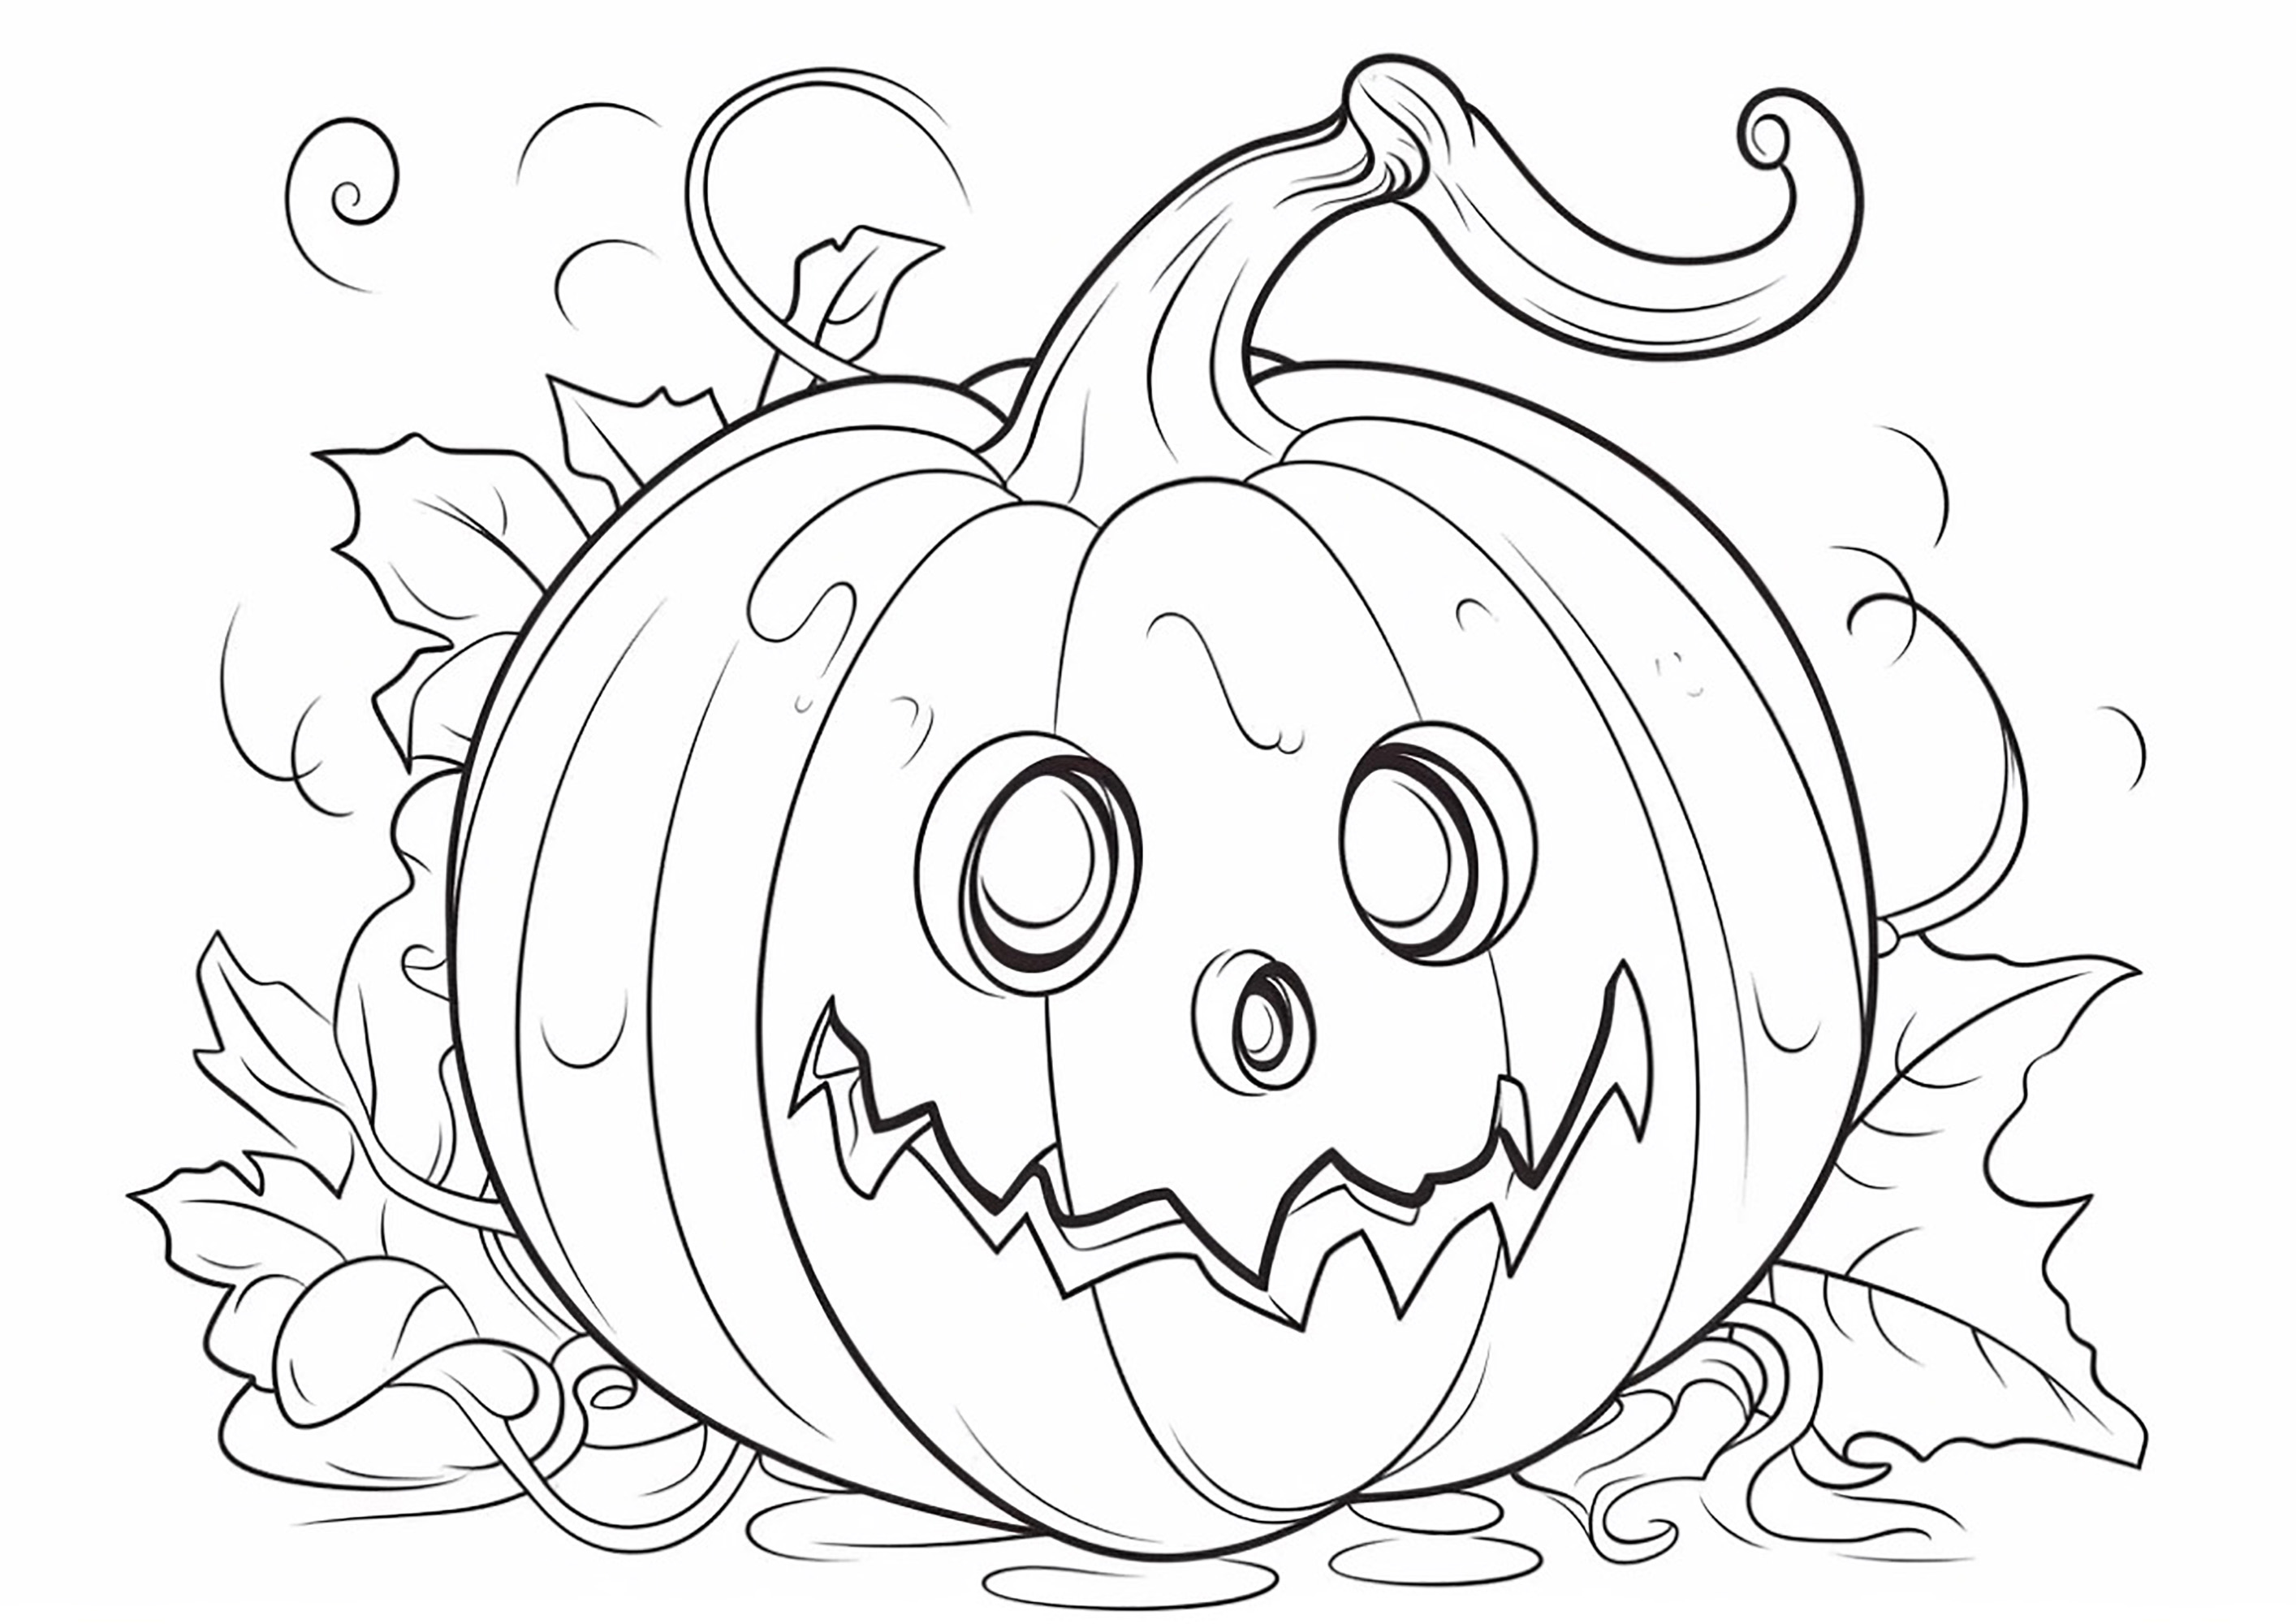 Spooky halloween pumpkin easy to color